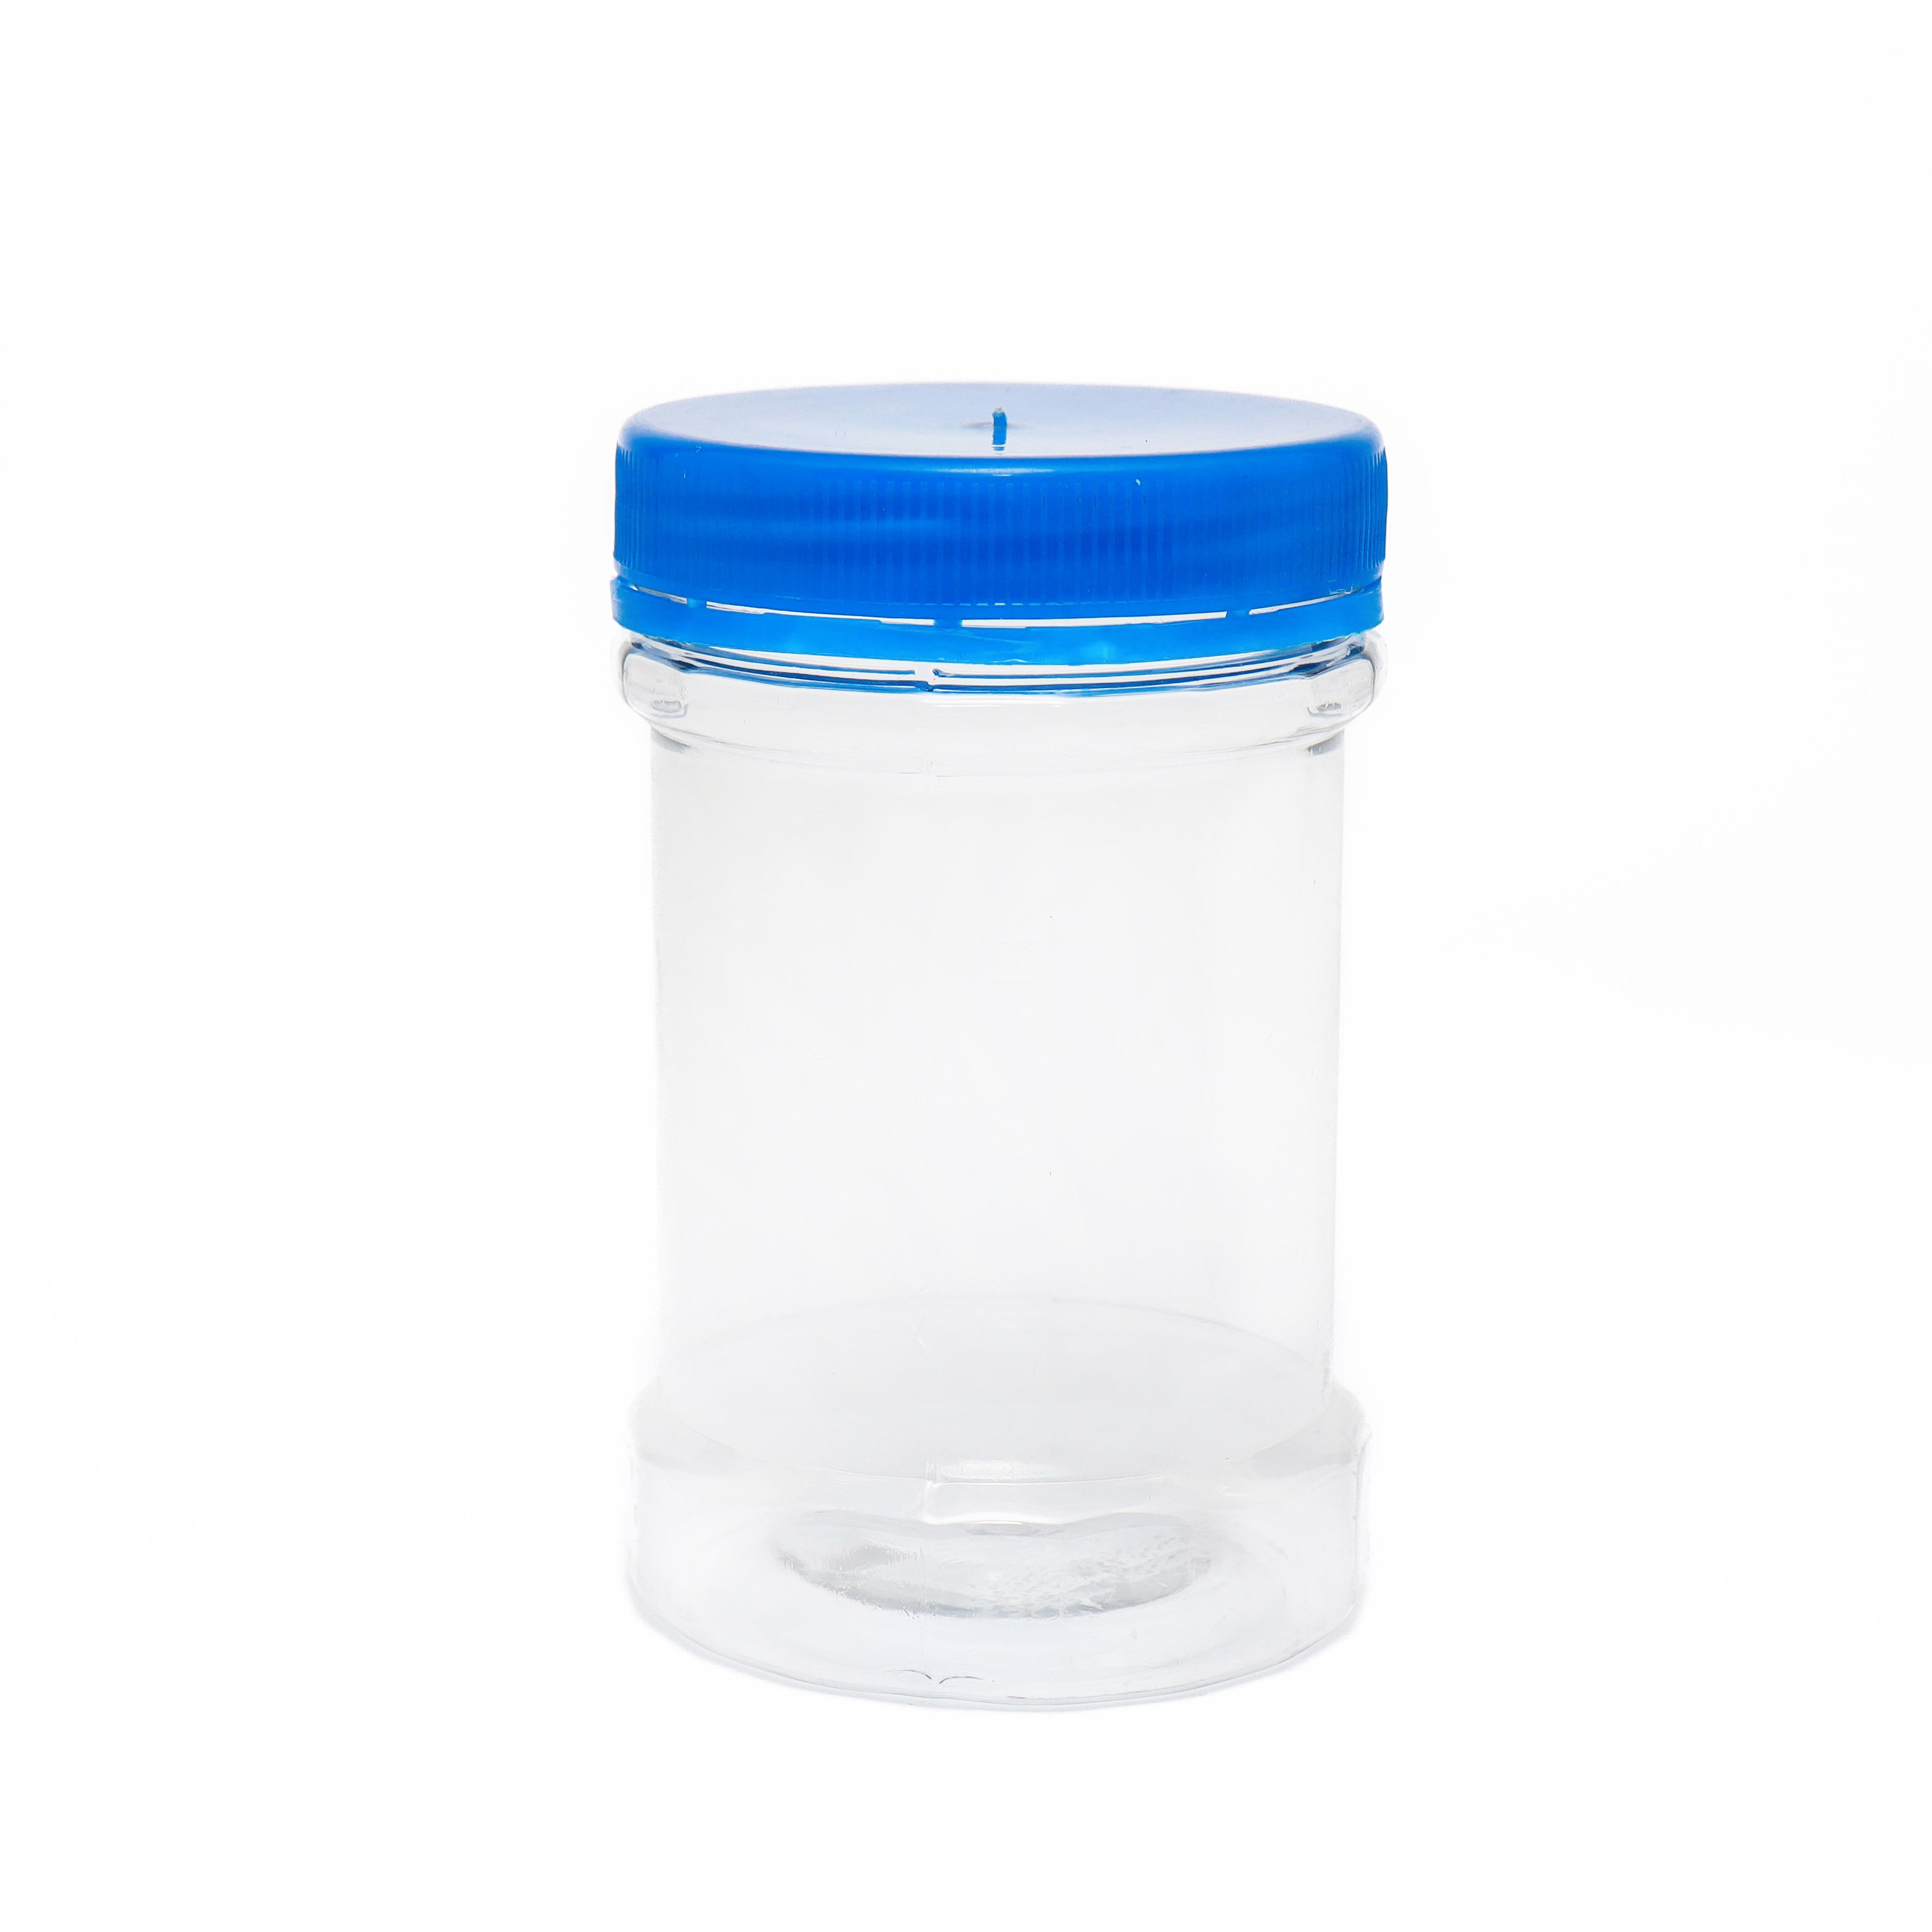 375ml Plastic Storage Jar Round with Blue Lid